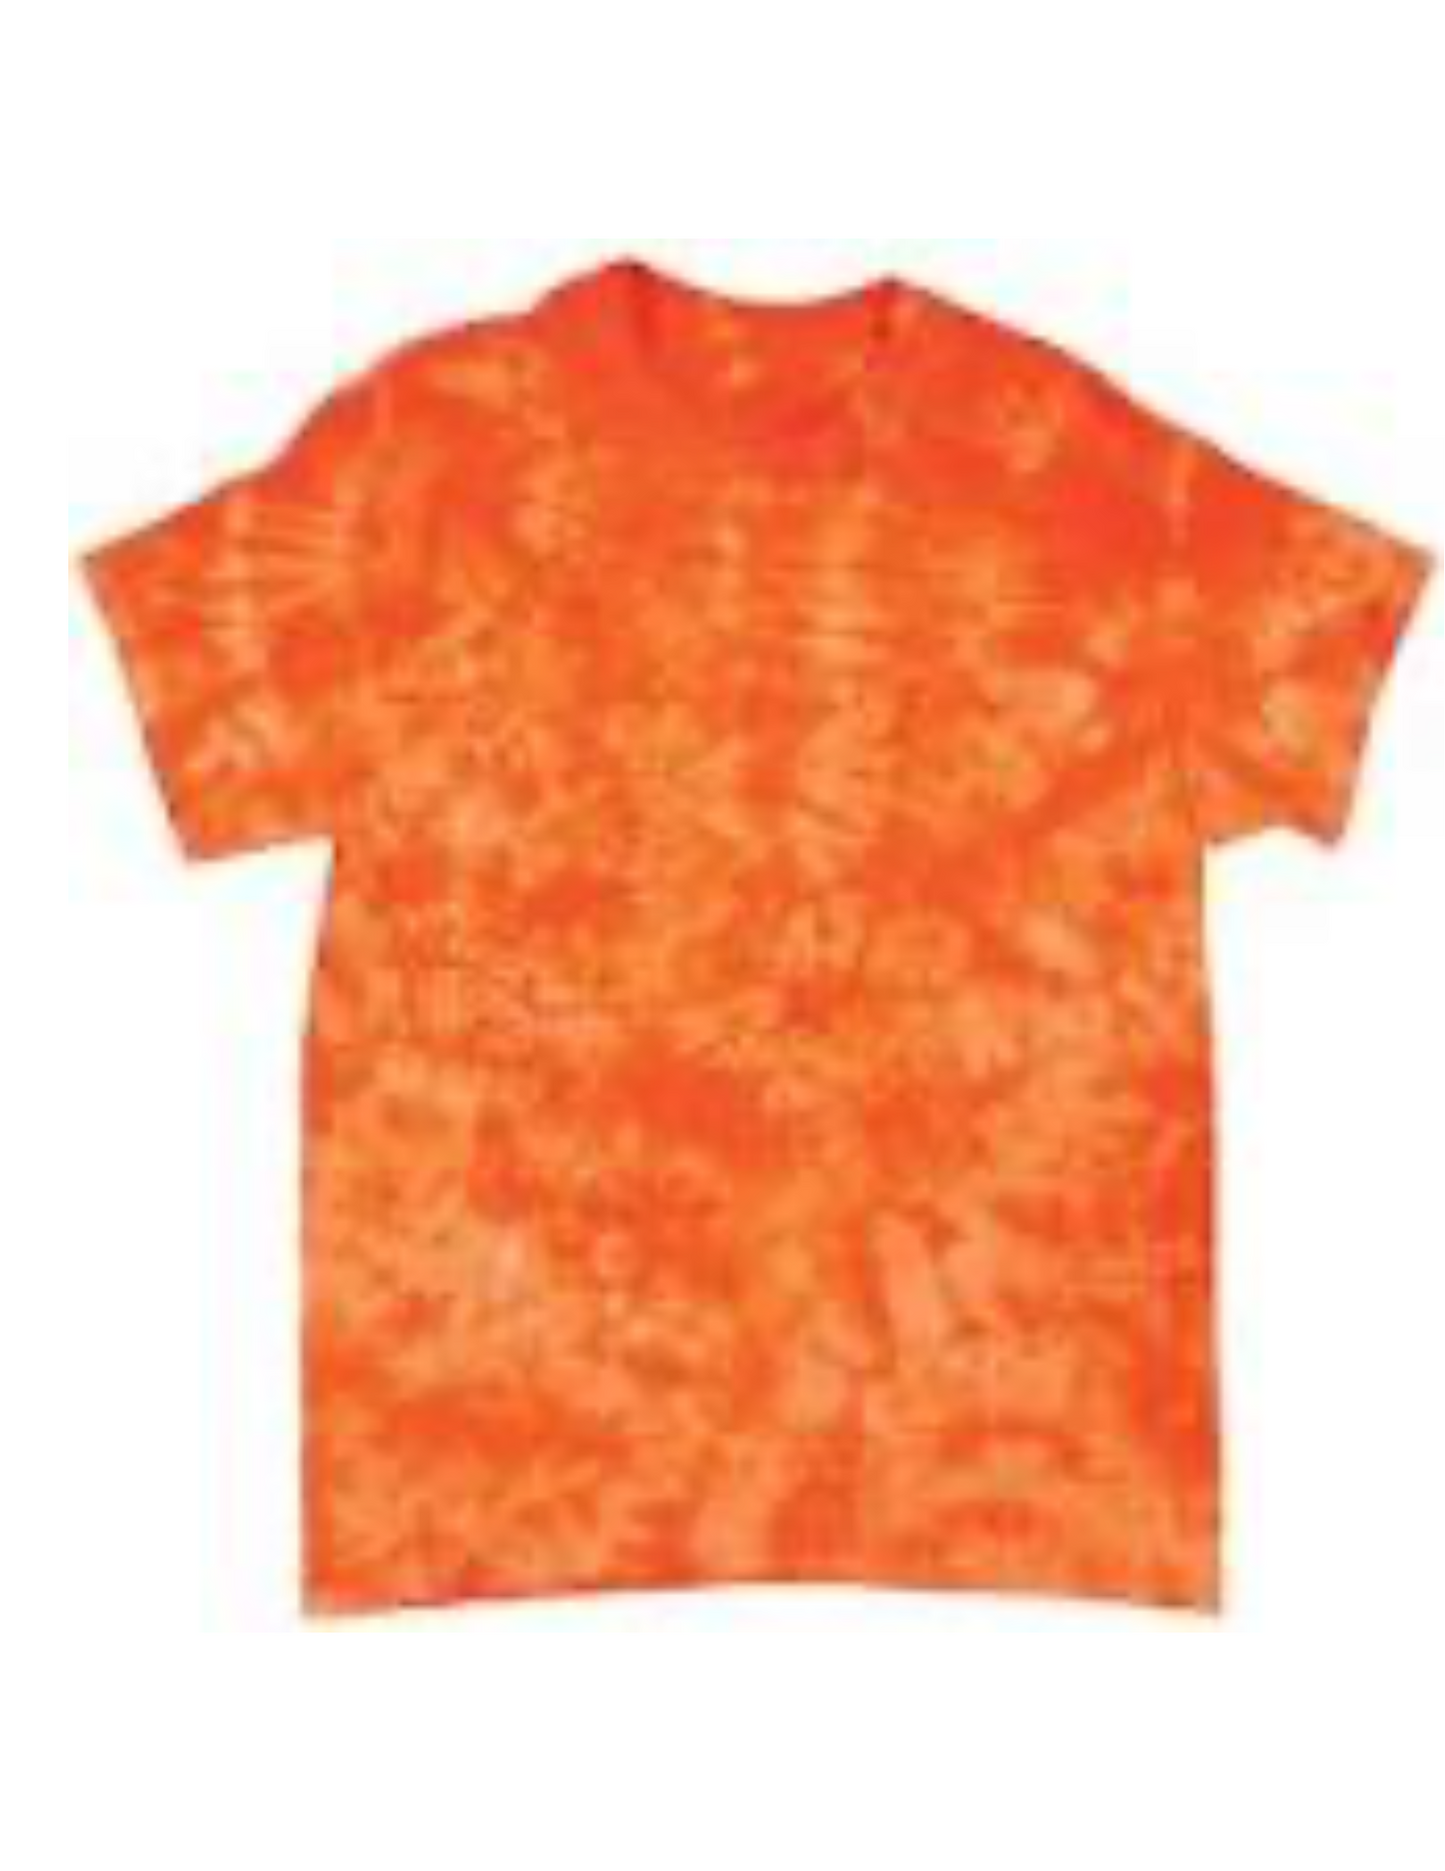 Orange Tie dye - Adult